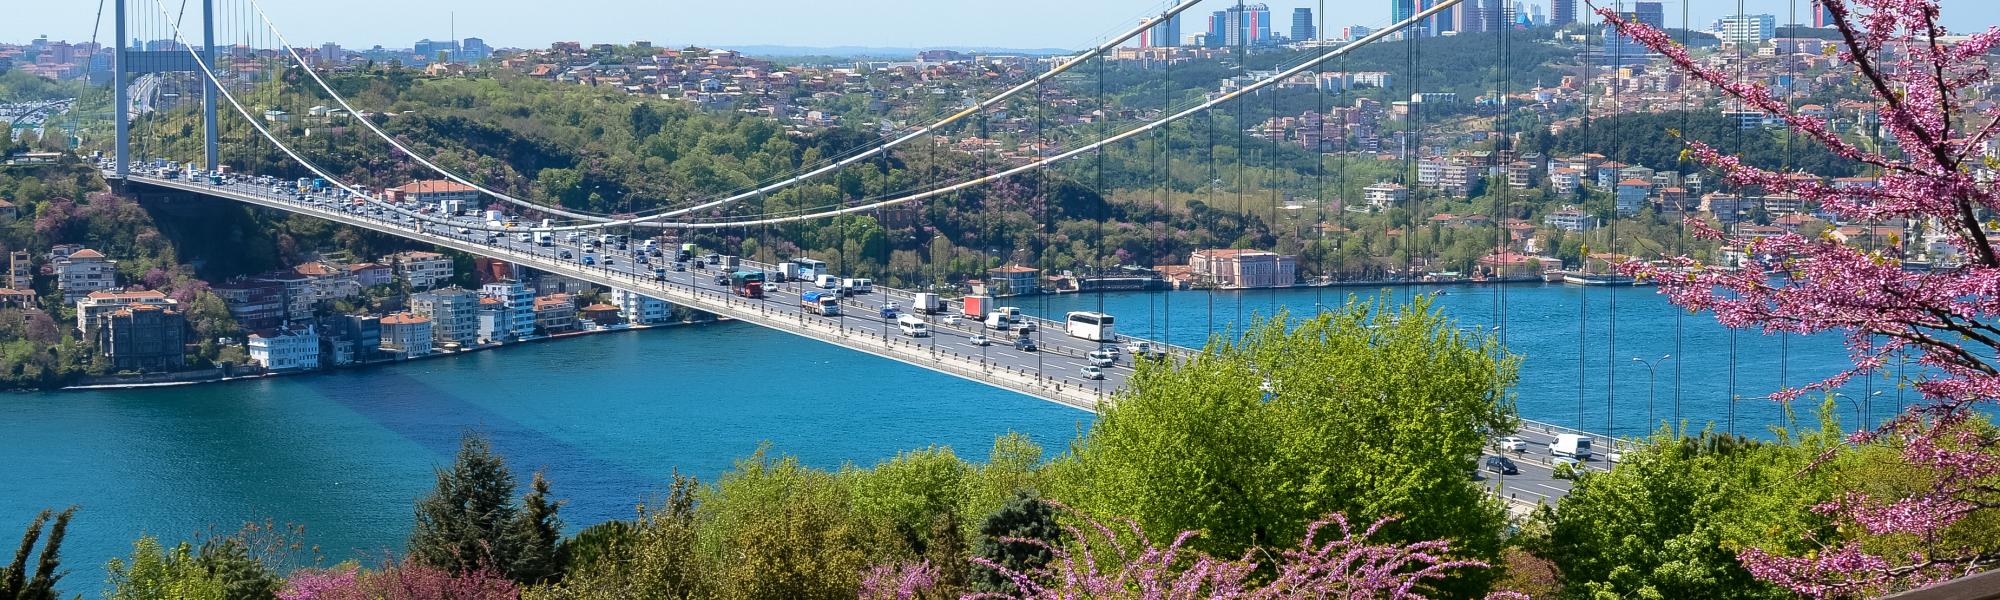 Bosporous bridge Istanbul